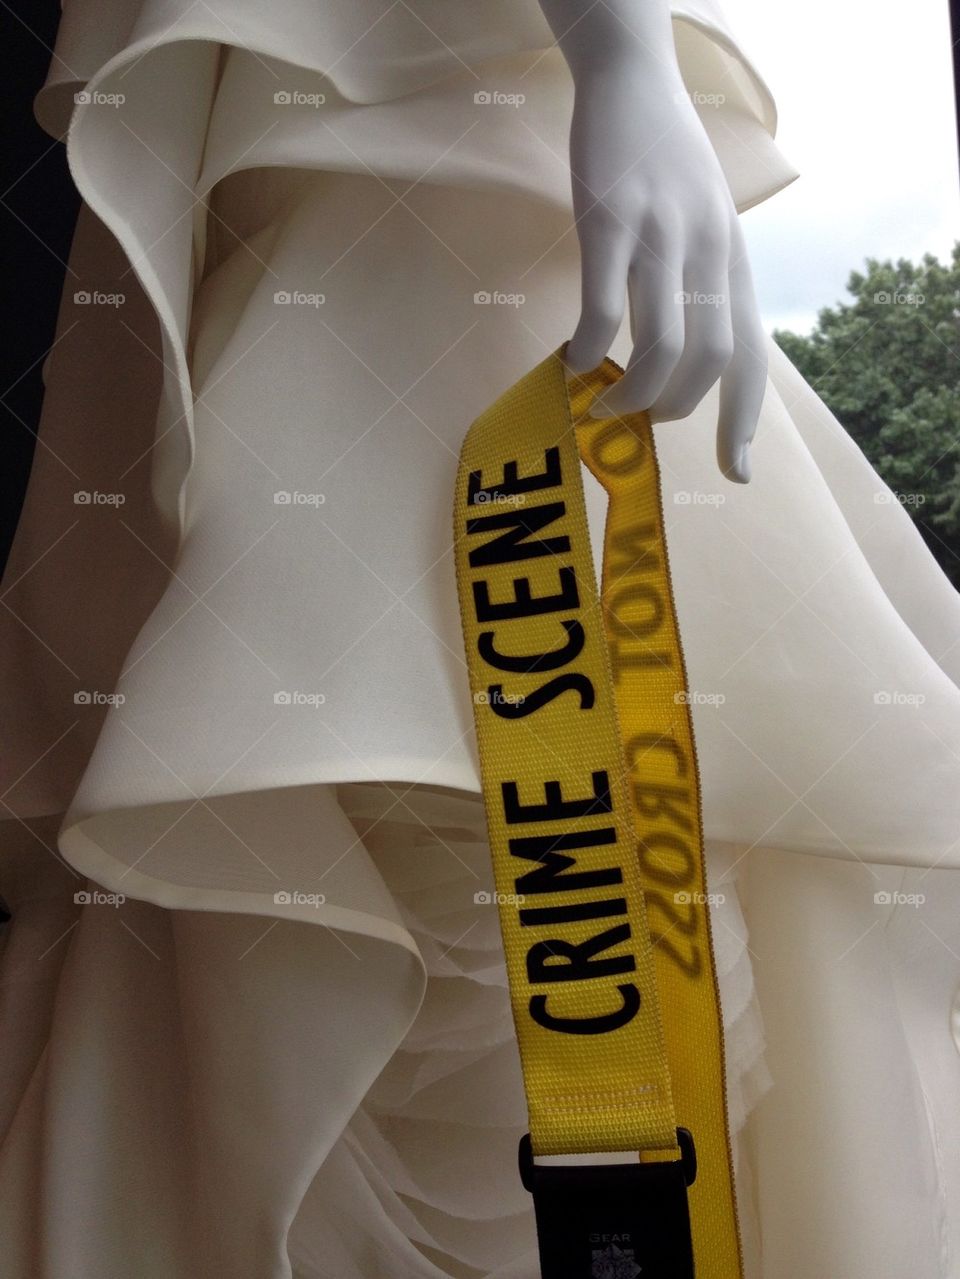 Crime scene mannequin